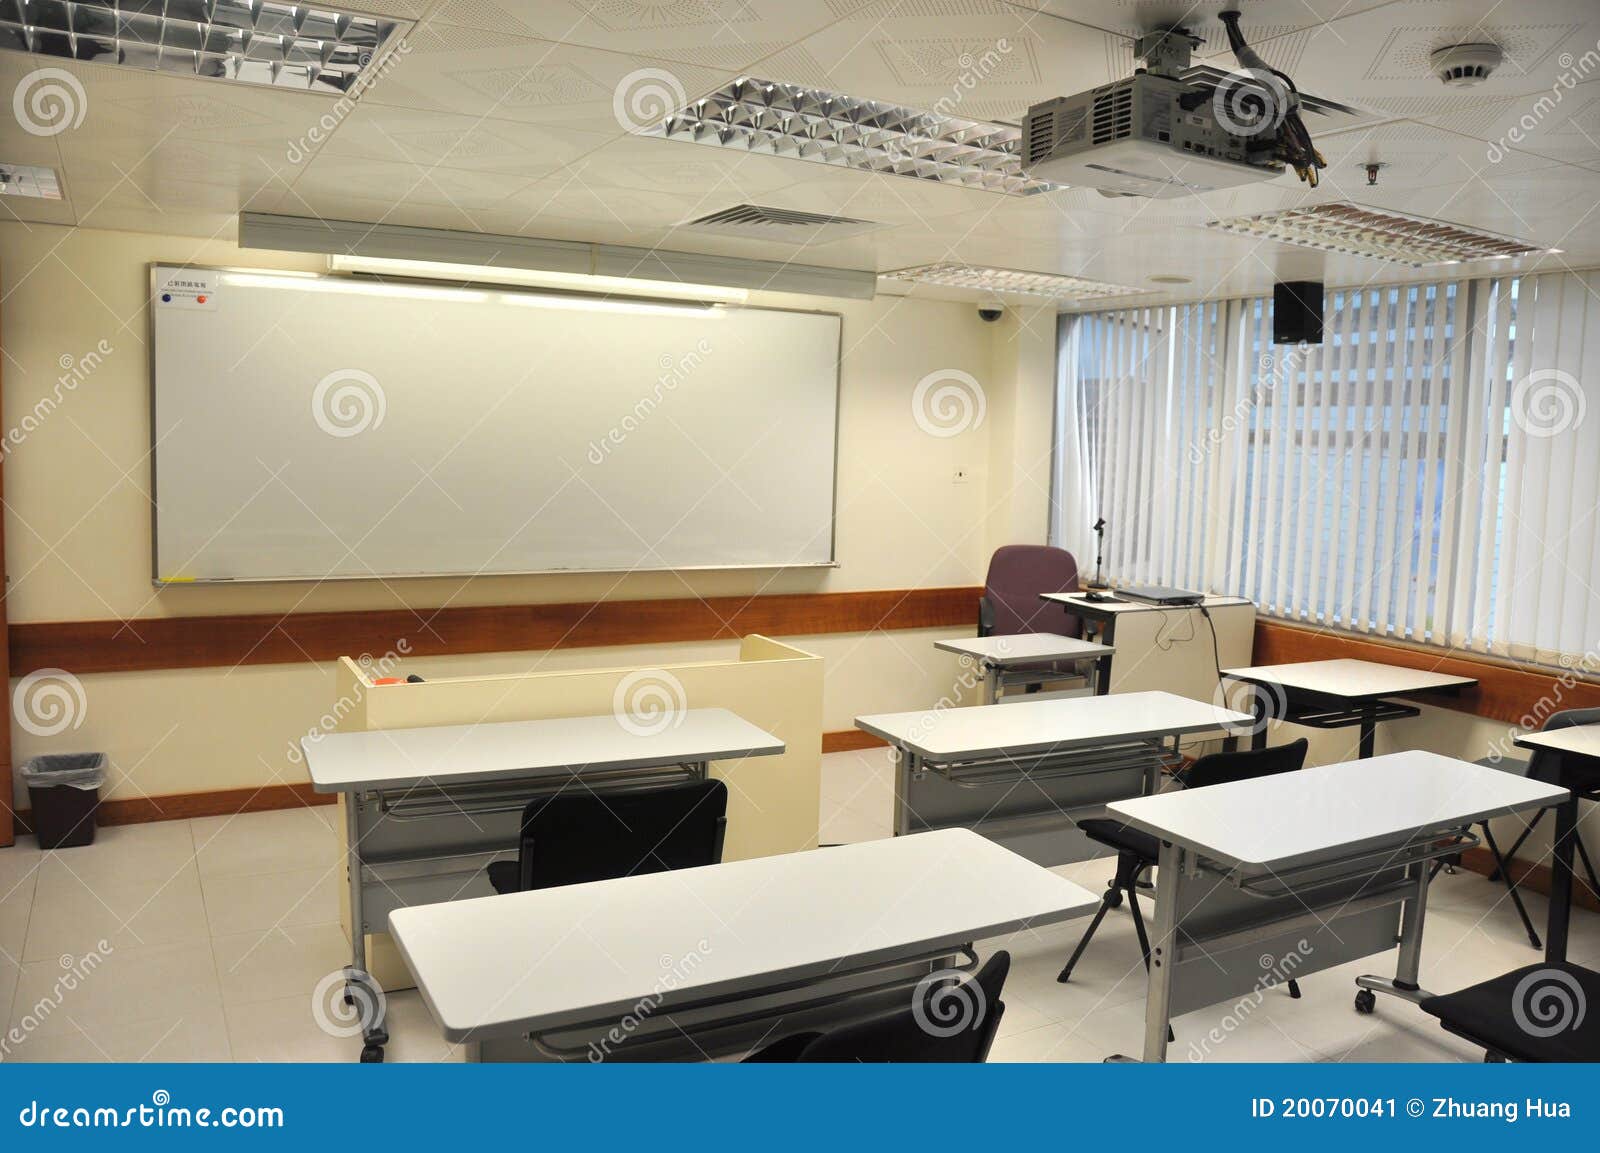 multi-media classroom